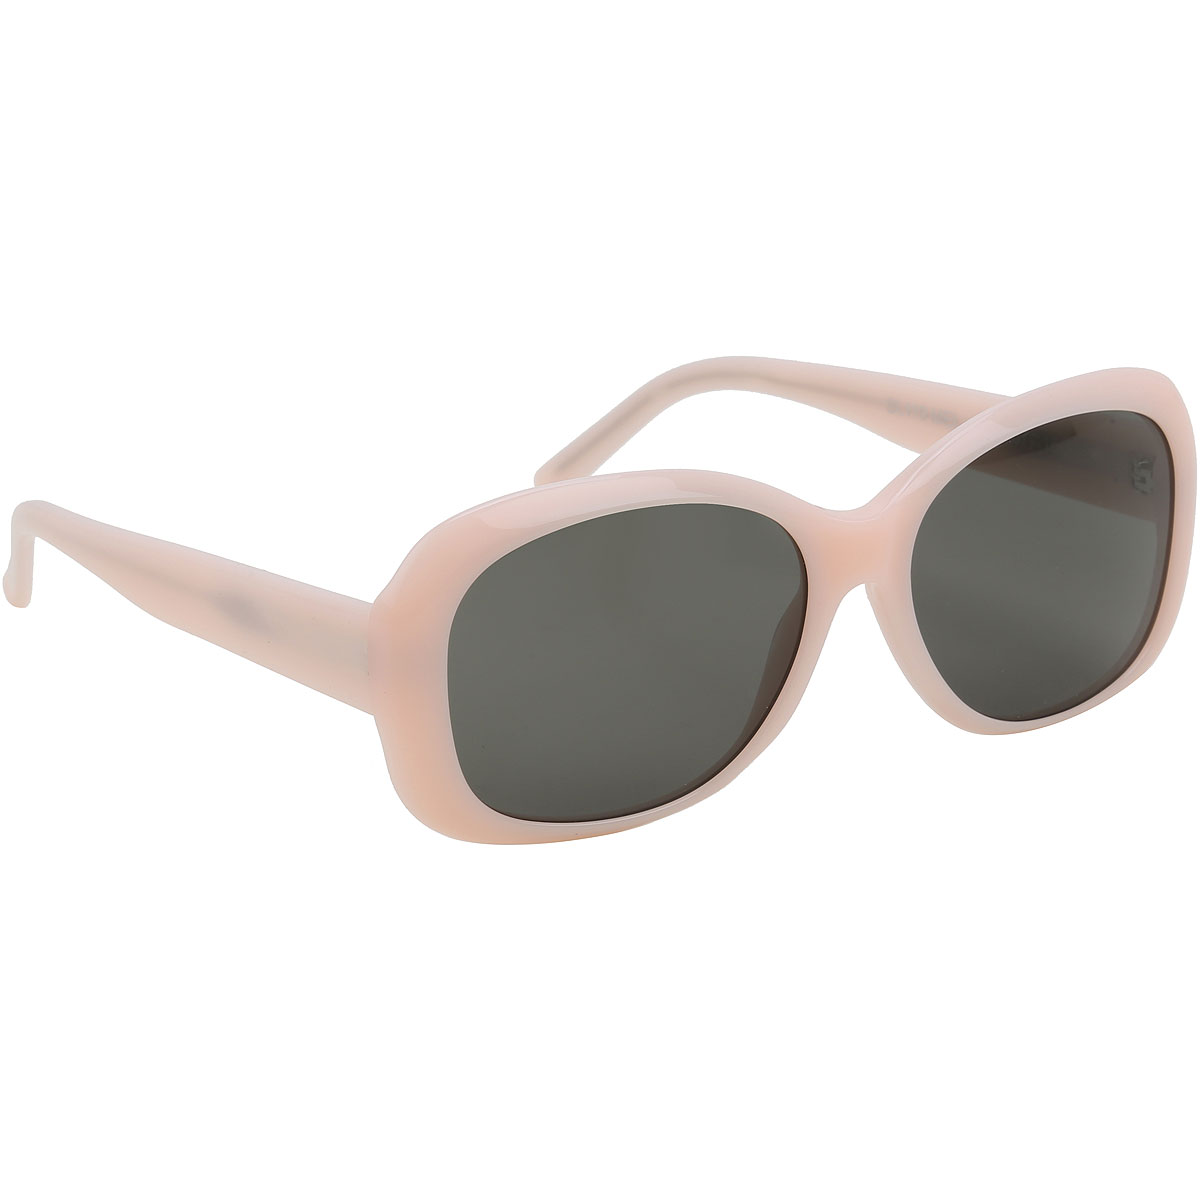 Sunglasses Saint Laurent, Style code sl119mel003